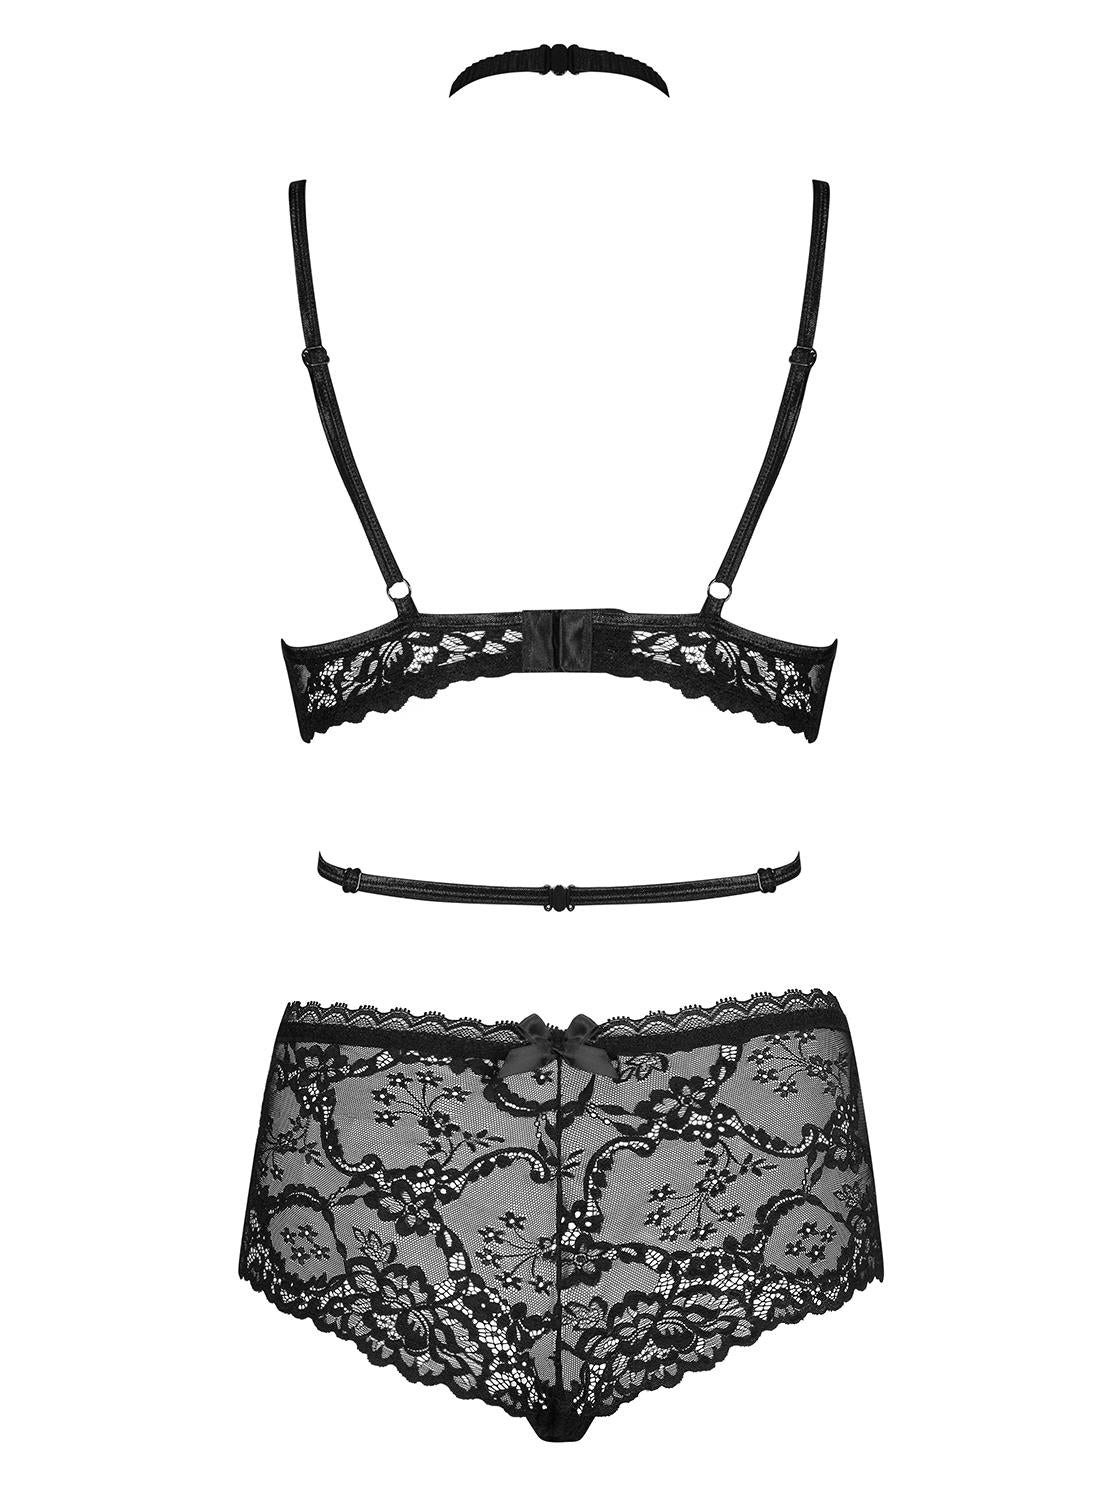 Raquelia a feminine set made of translucent and elastic lace in black